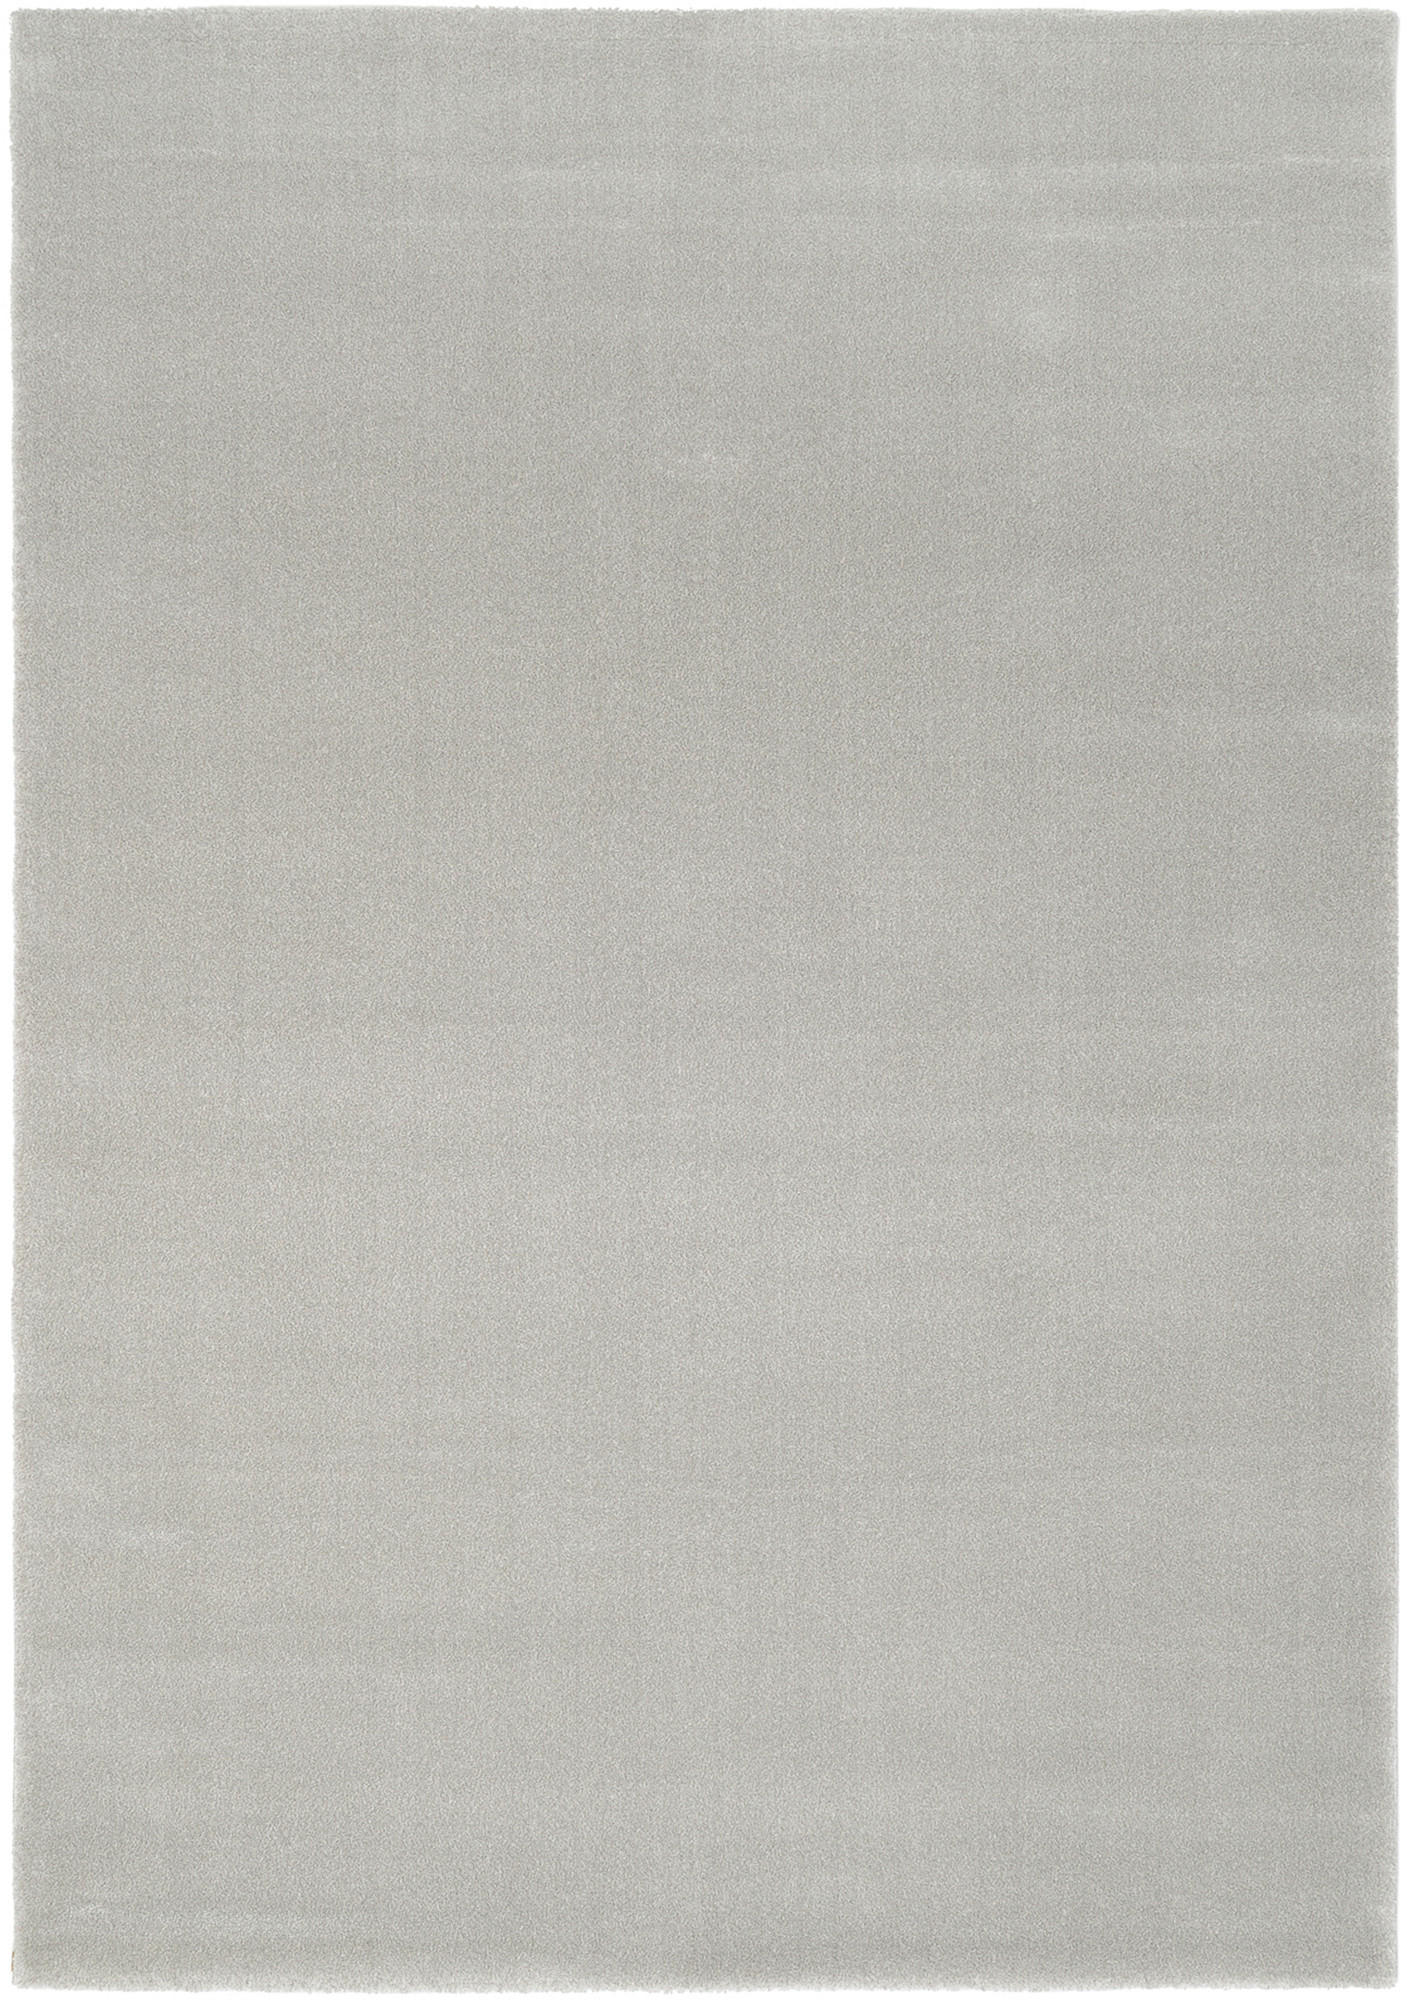 TEPPICH 140/200 cm  - Grau, Basics, Textil (140/200cm) - Novel